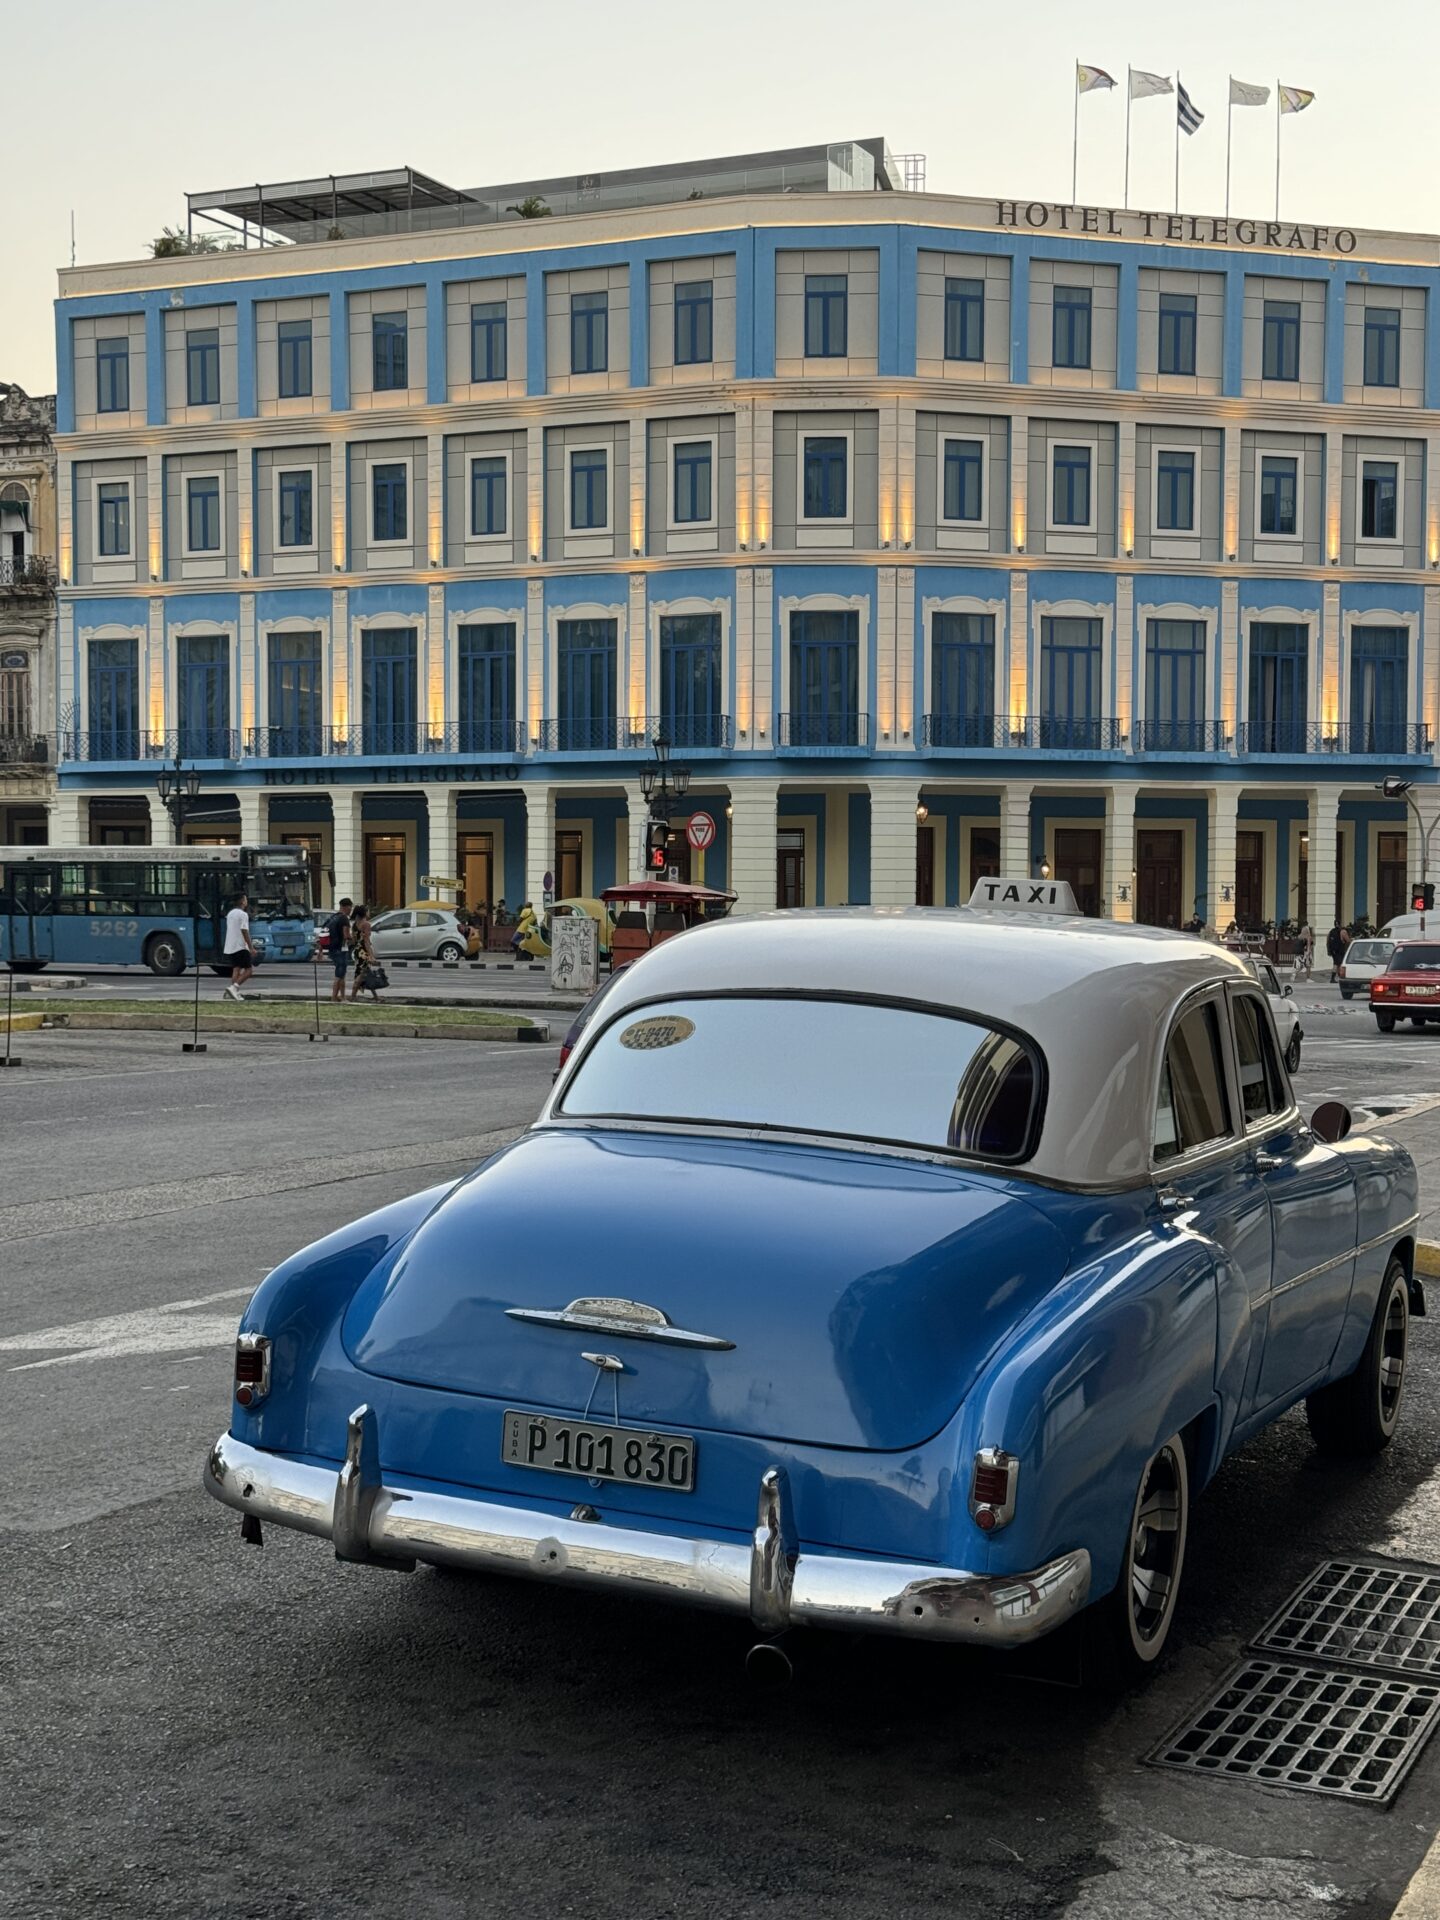 Classic 1950's car of Old Havana downtown Cuba, in front of Hotel Telegrafo, by Carol Schiraldi of Carol's Little World 